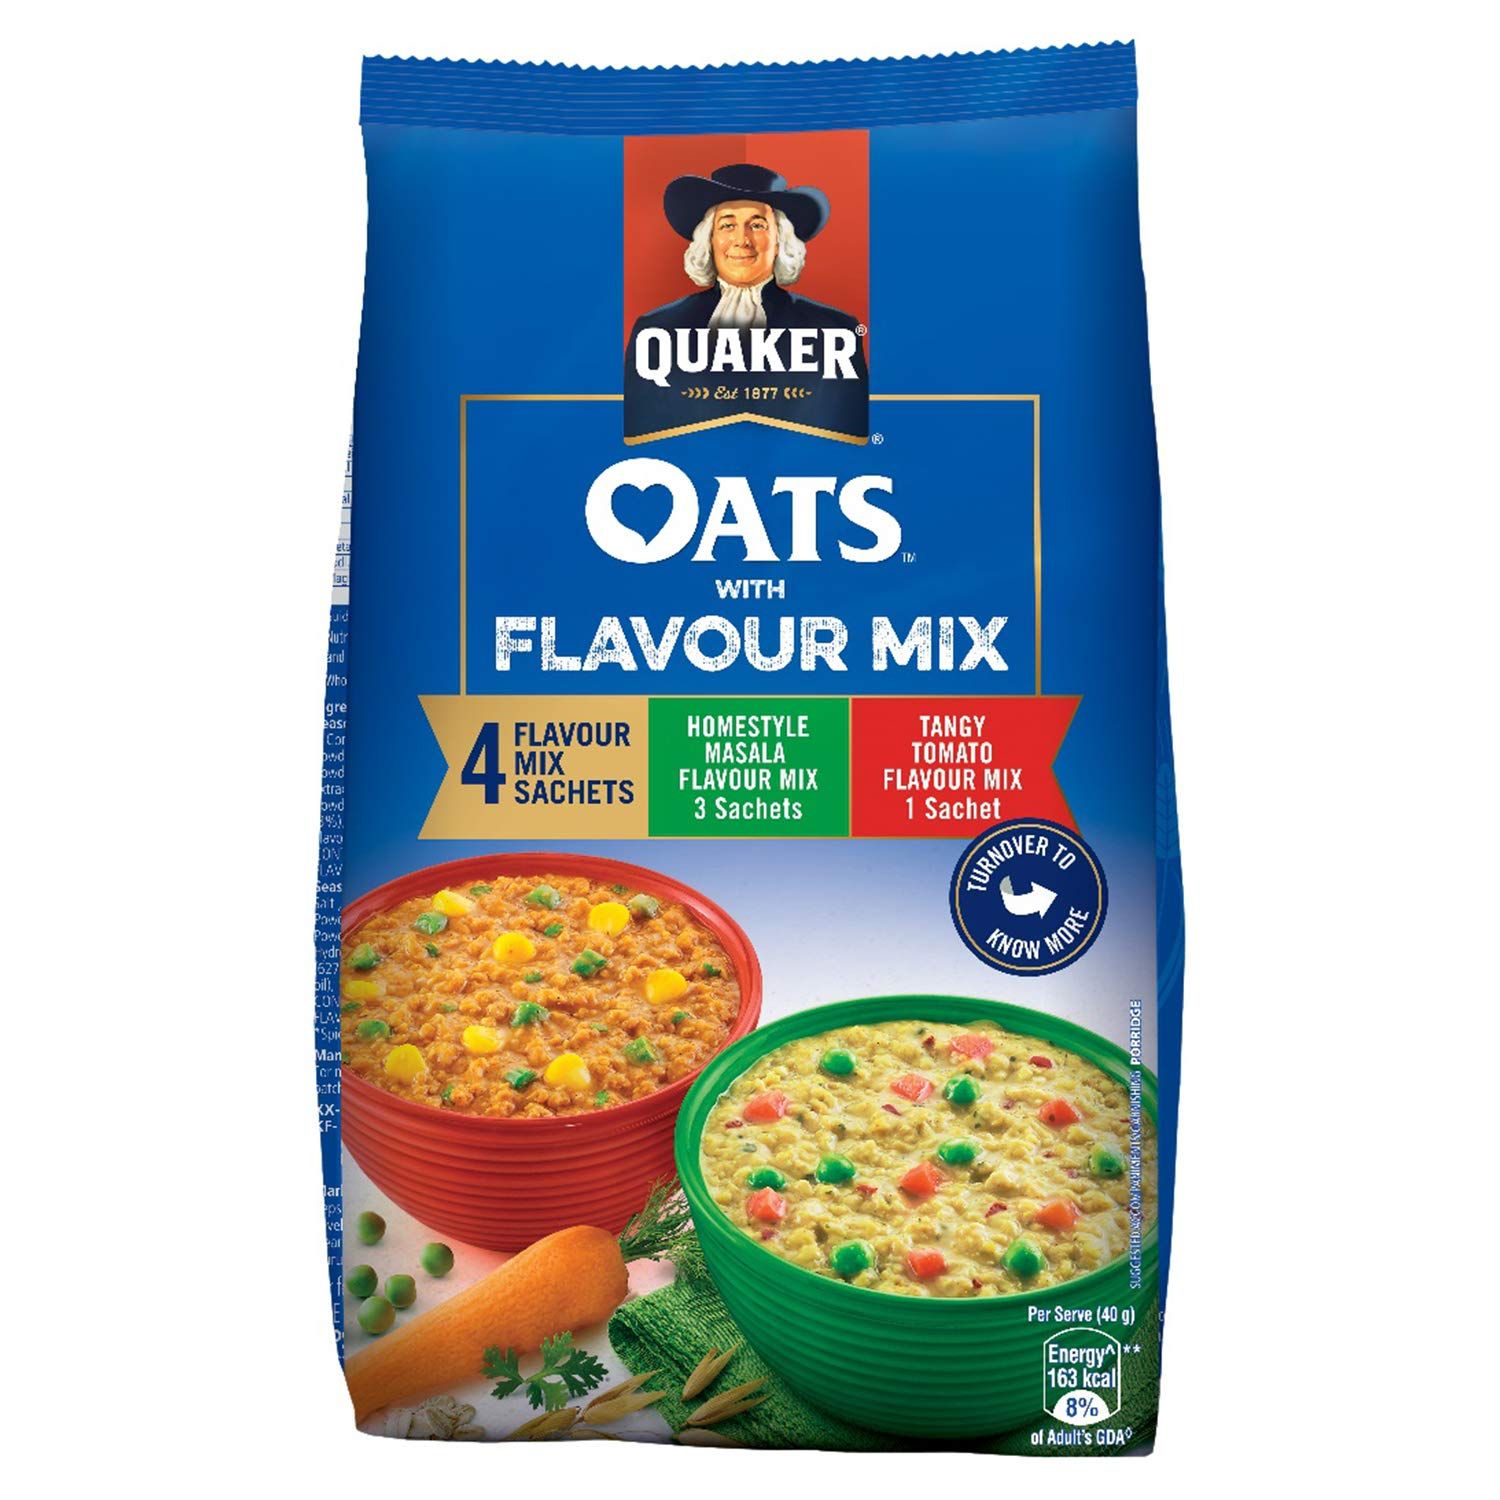 Quakar Oats With Flavour Mix Image